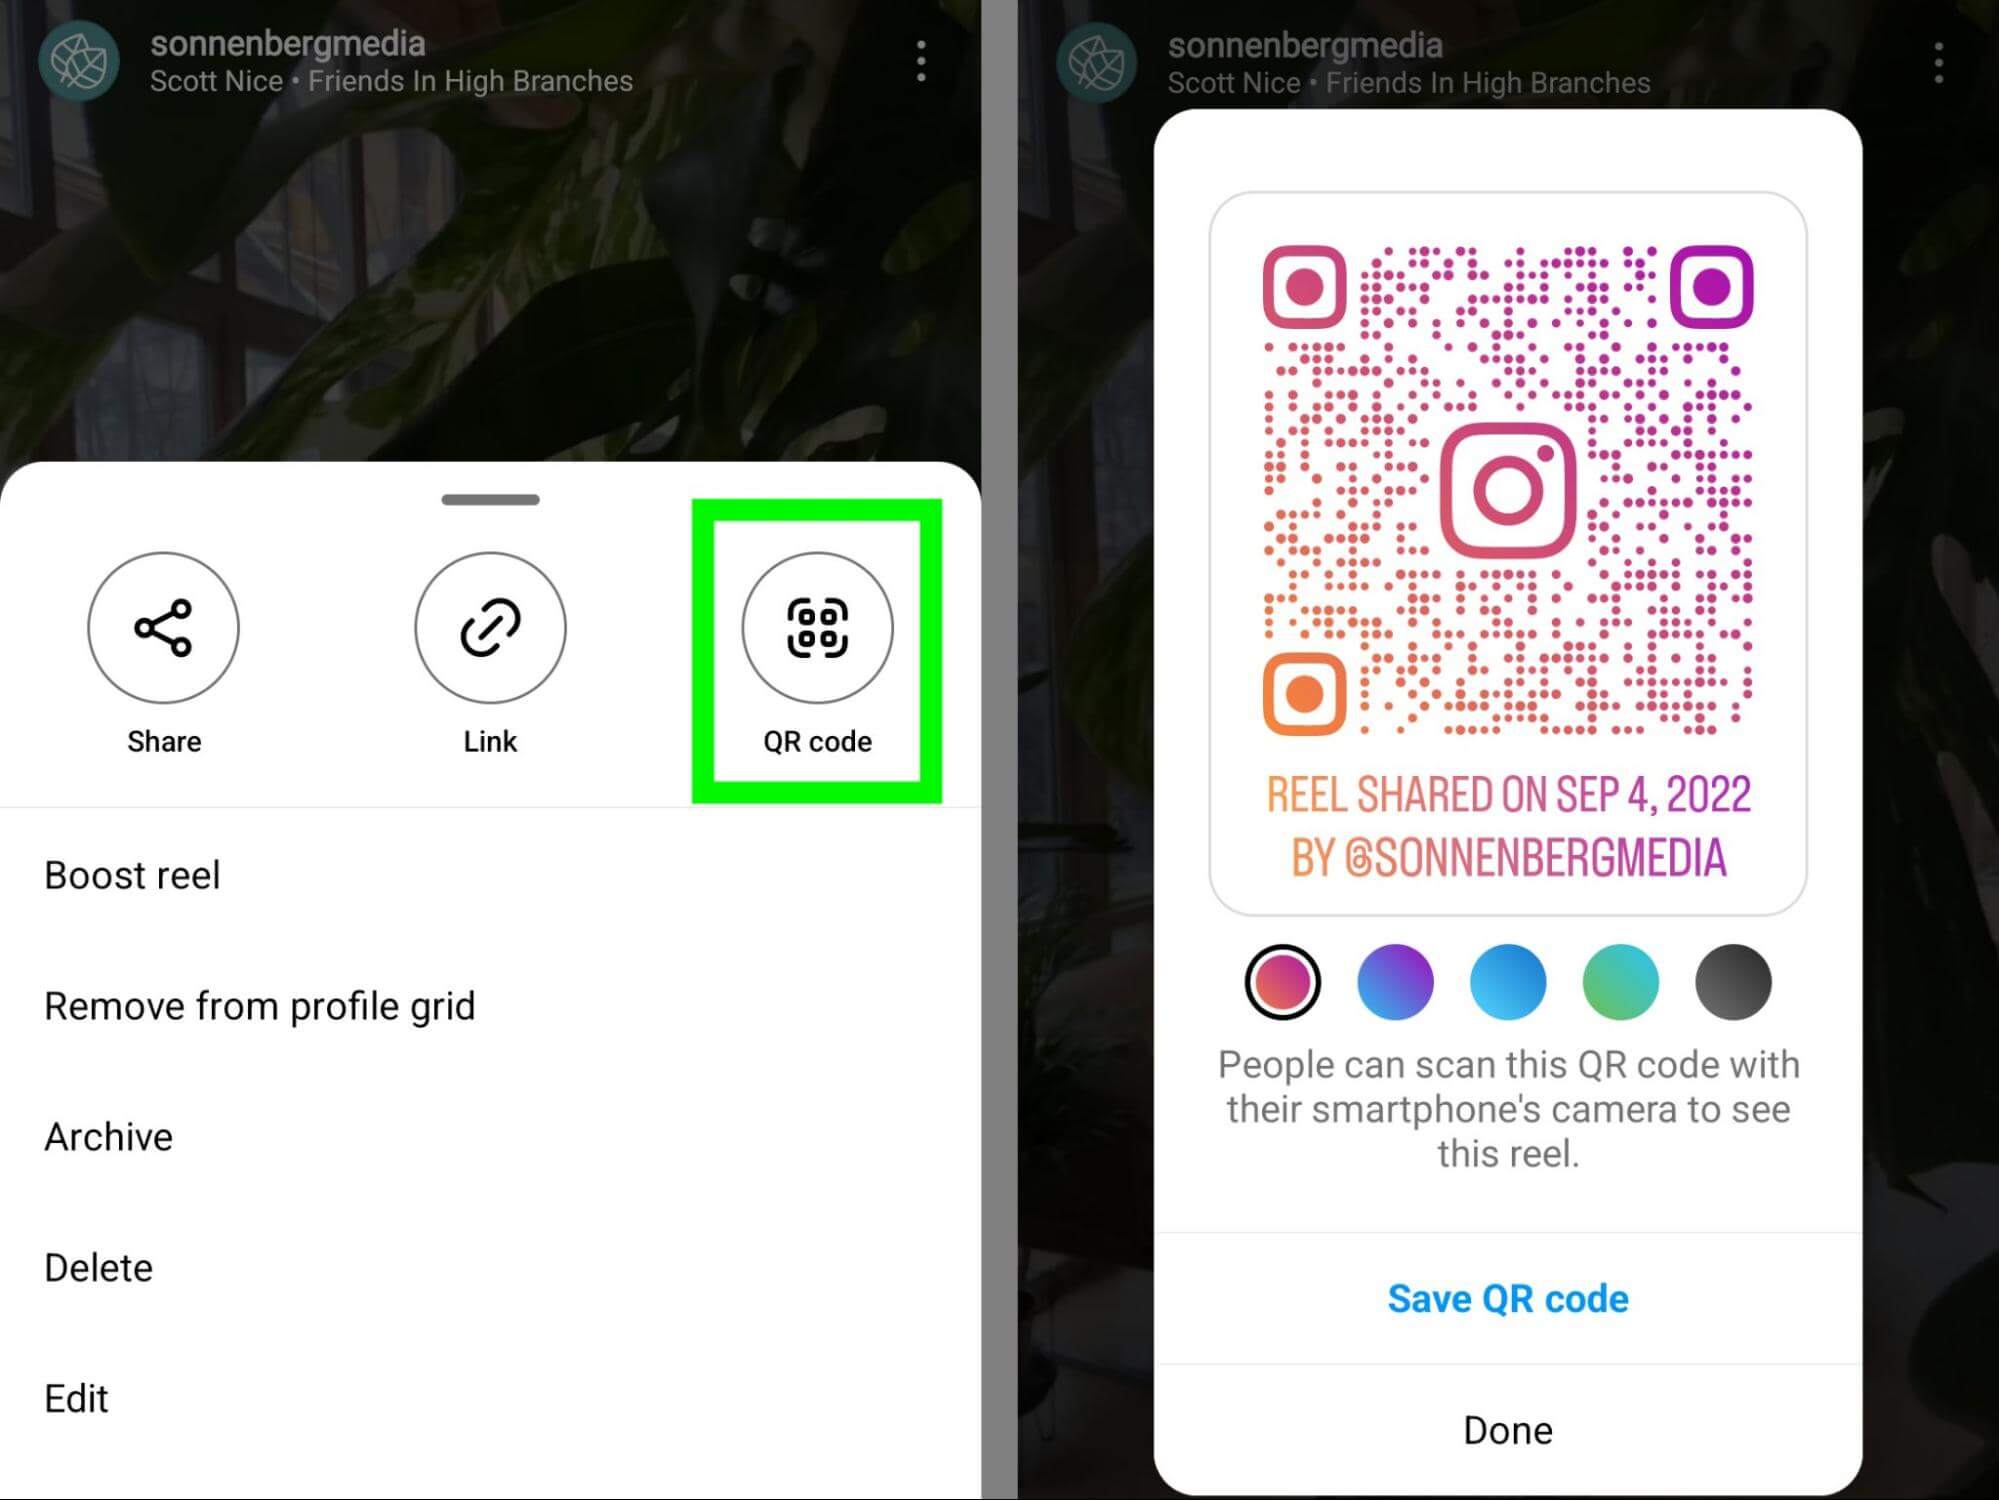 https://www.socialmediaexaminer.com/wp-content/uploads/2022/10/how-to-create-an-instagram-qr-code-to-share-reels-sonnenbergmedia-example-3.jpg